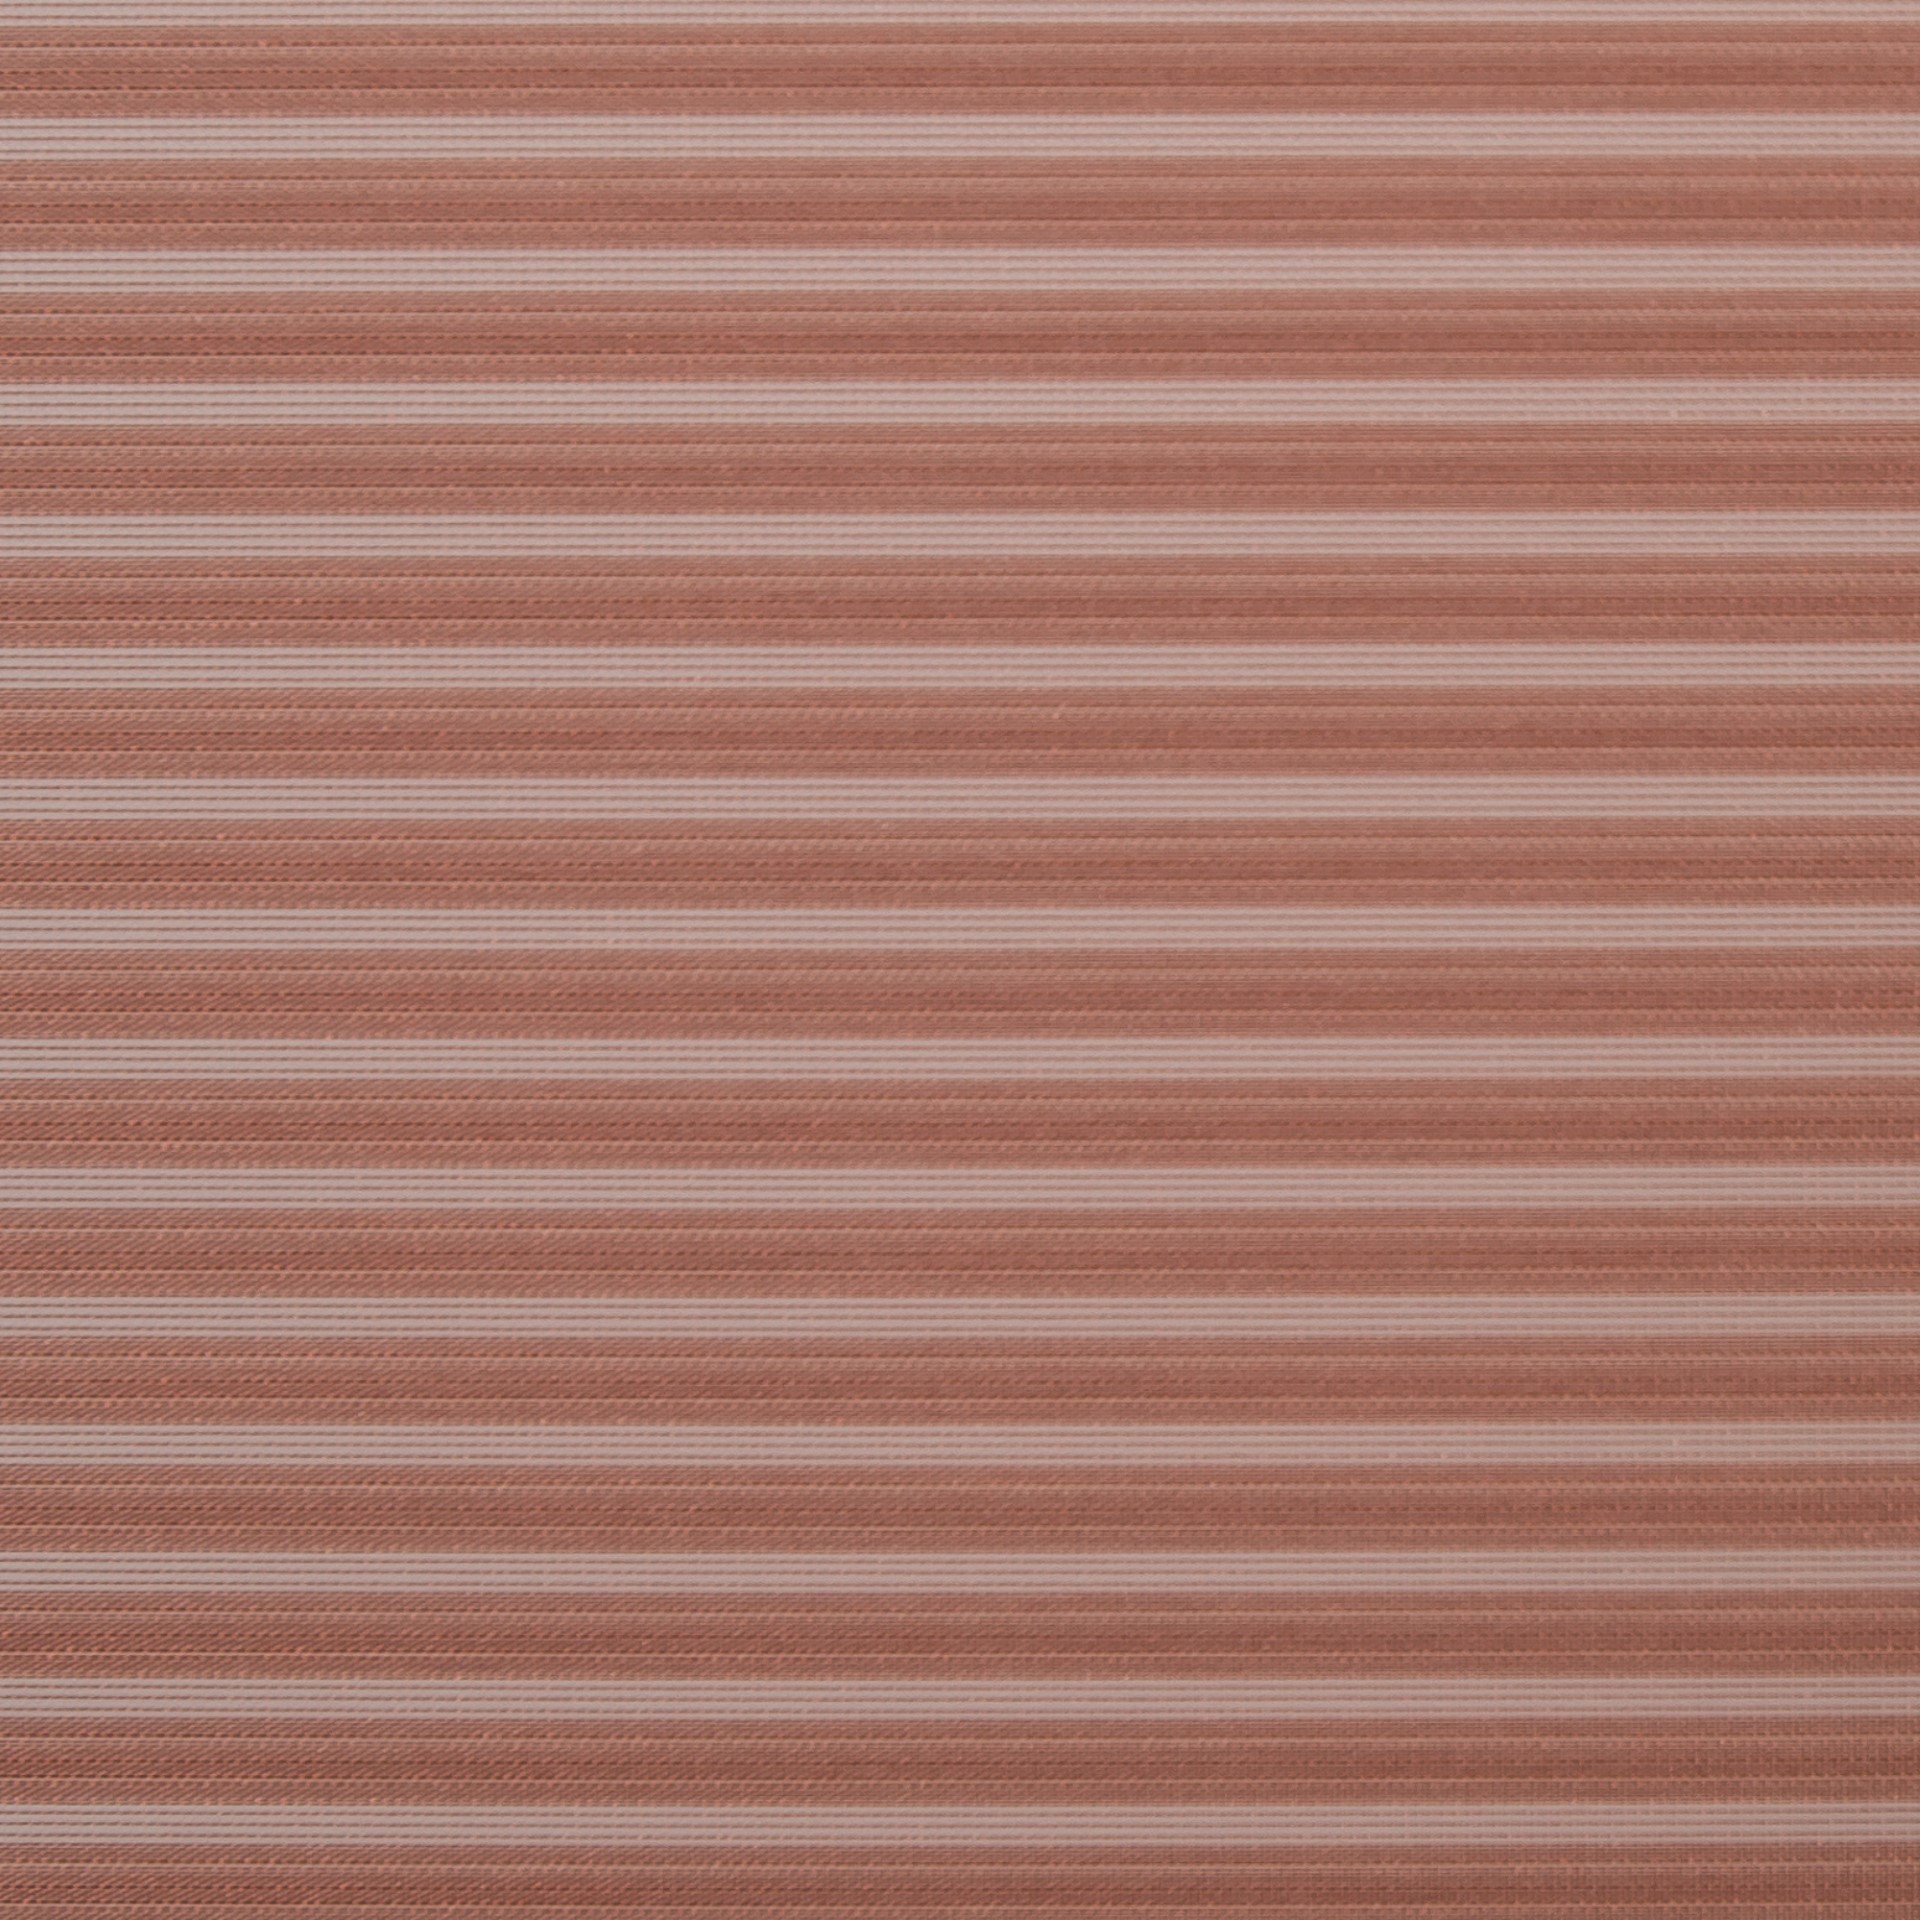 Cebra Translucent Roller Blind Copper Fabric Detail